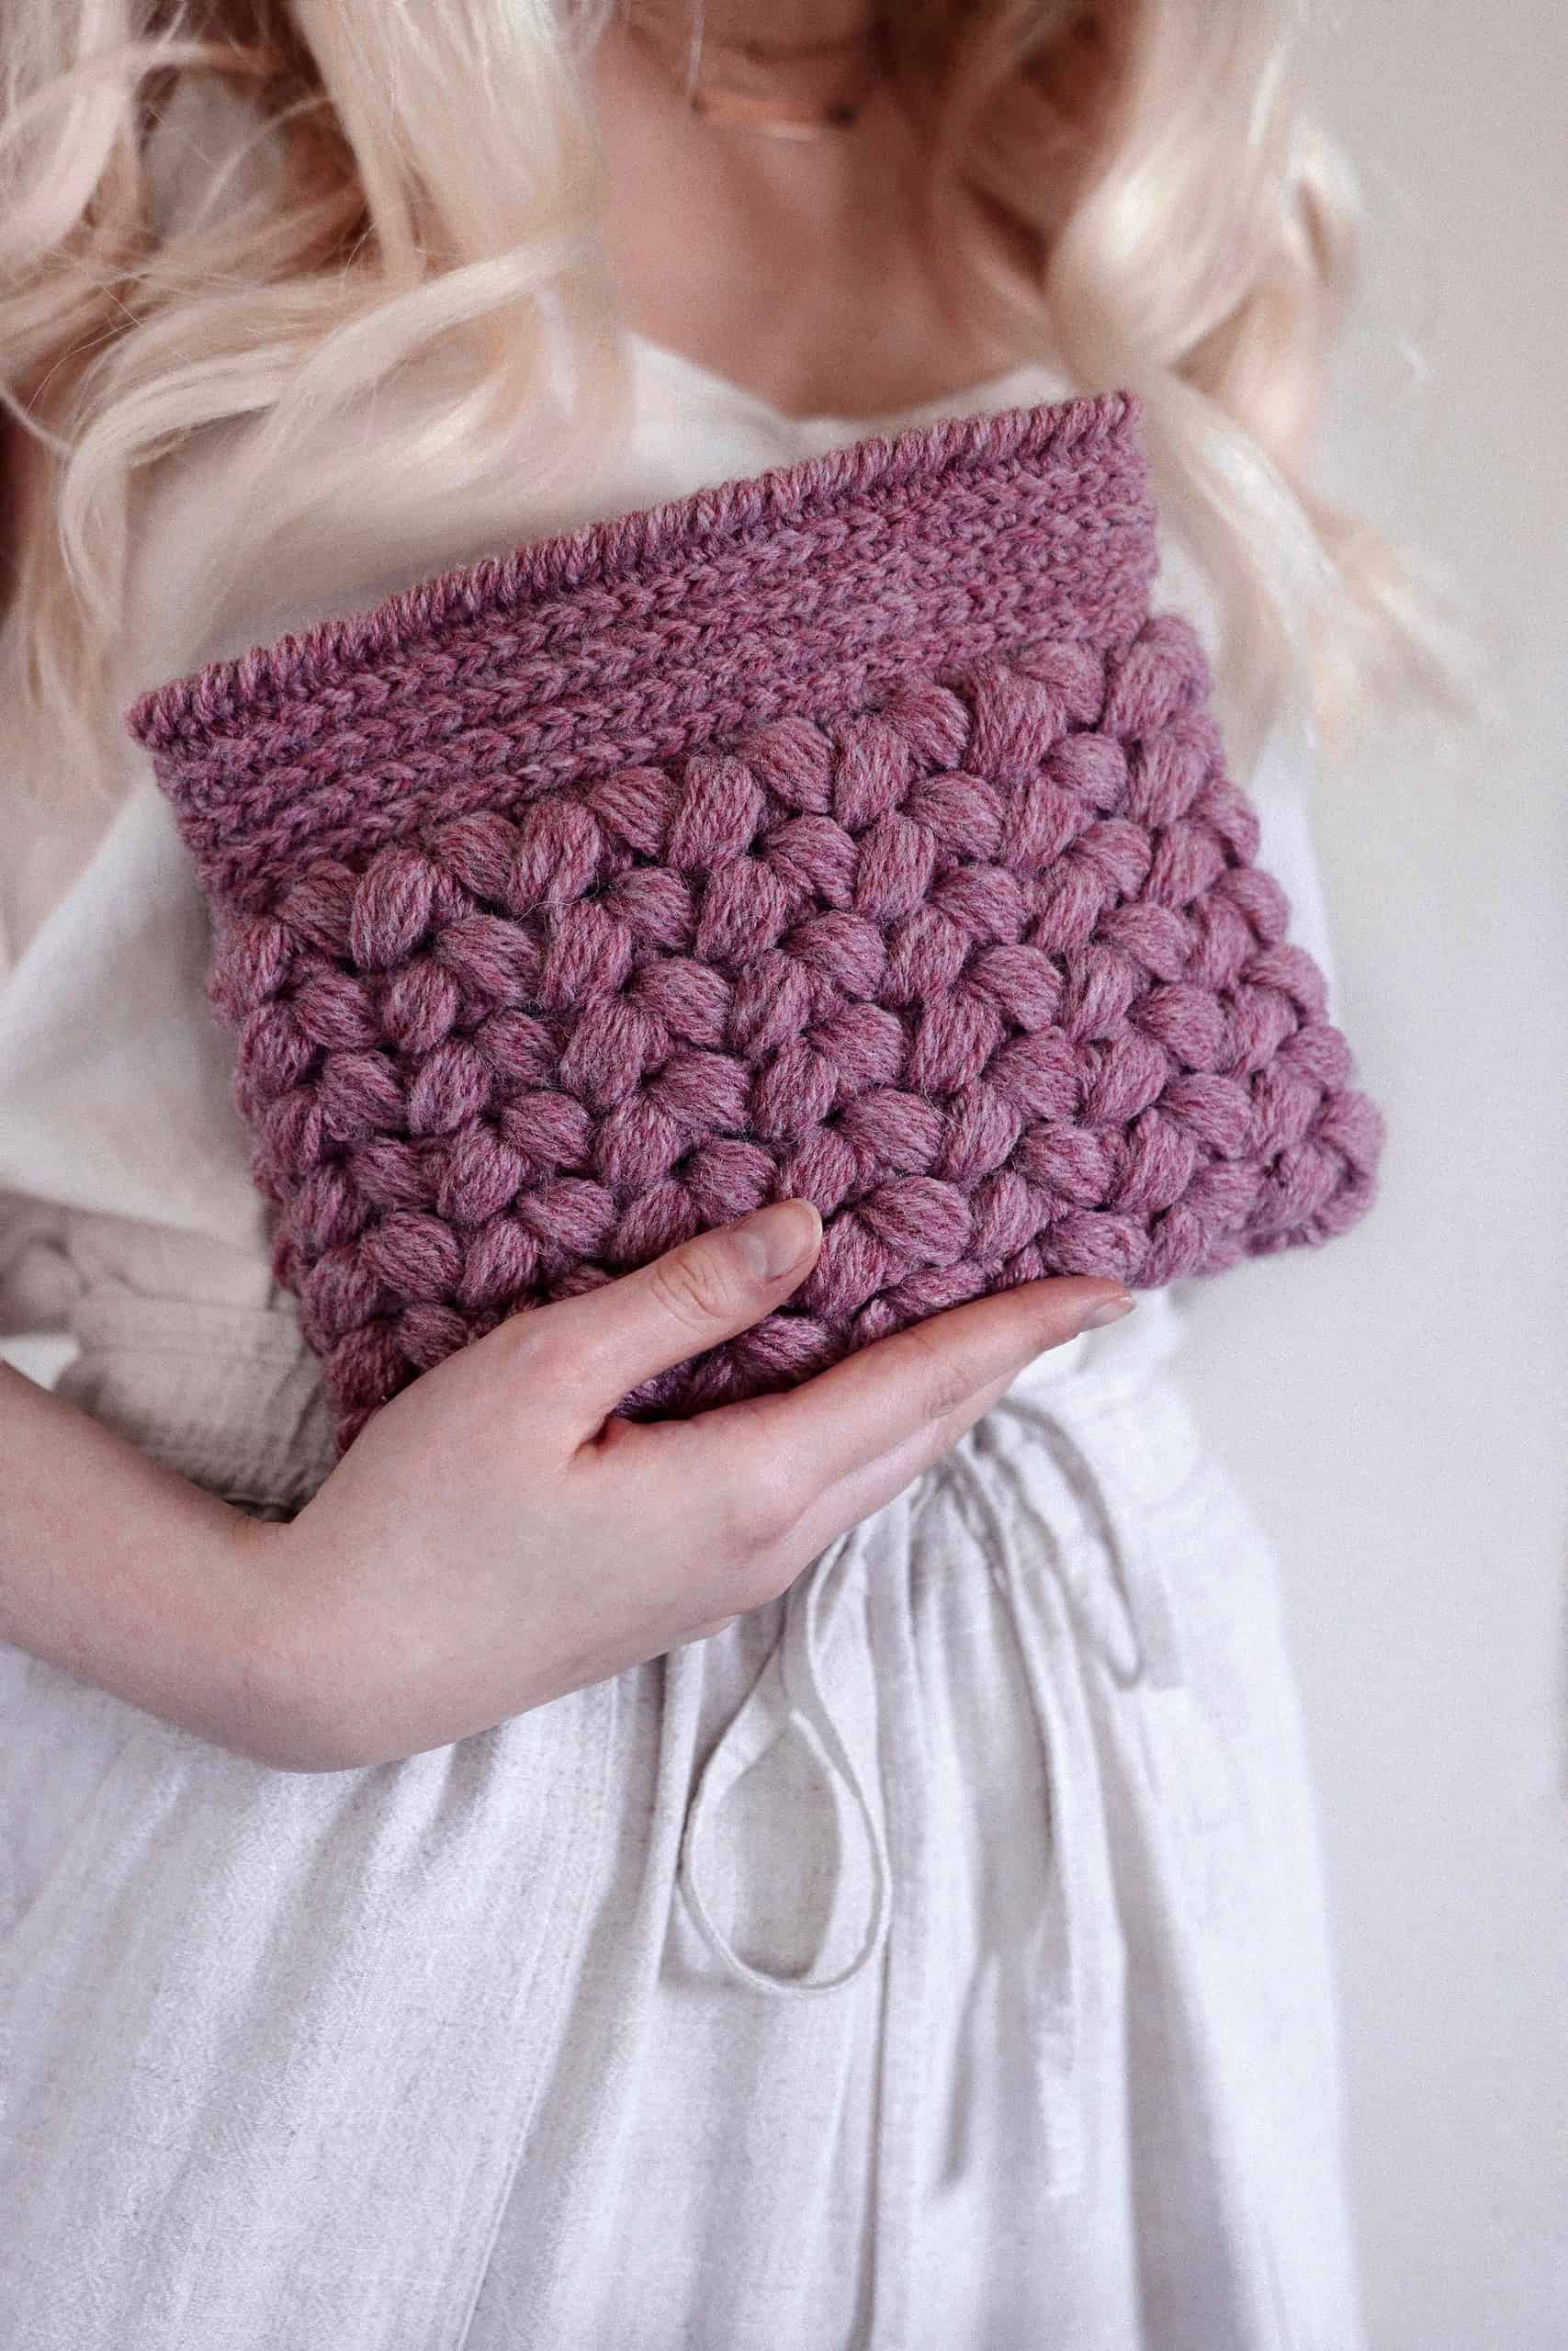 Crochet Clutch Bag | Make My Day Creative